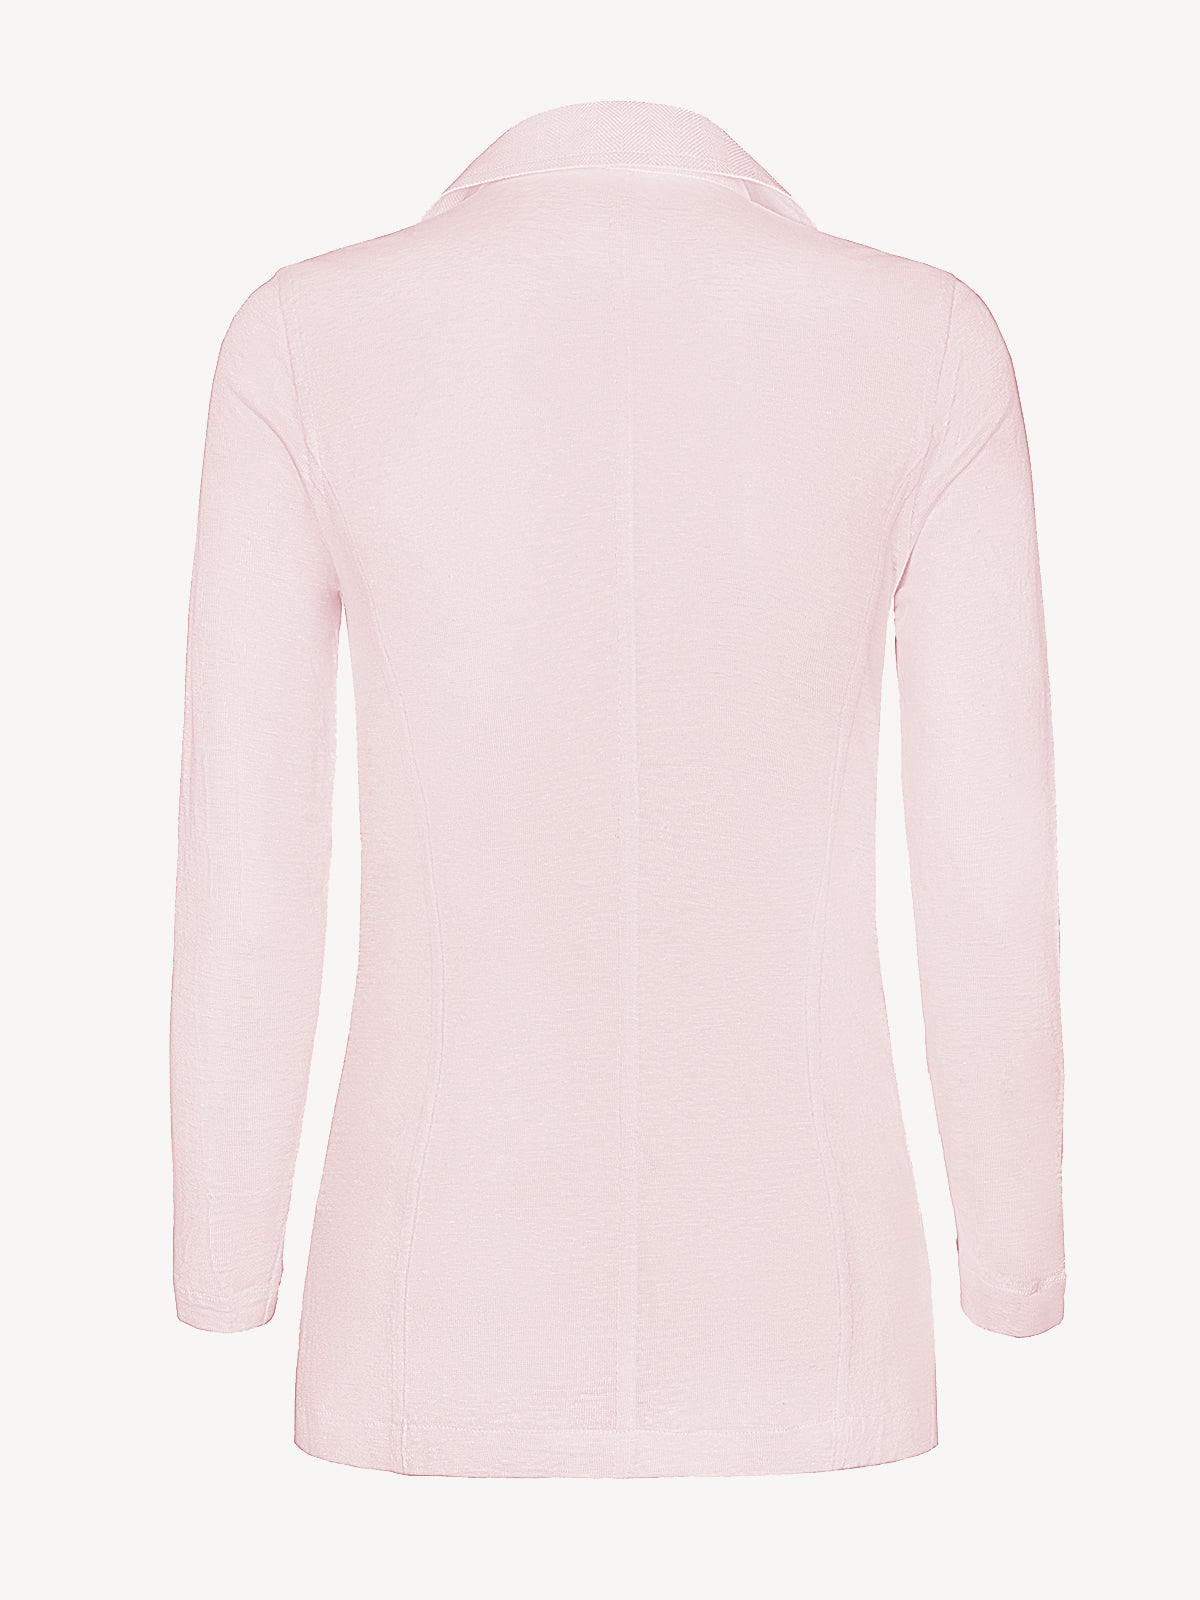 Giacca Sud Woman 100% Capri pink linen jacket back